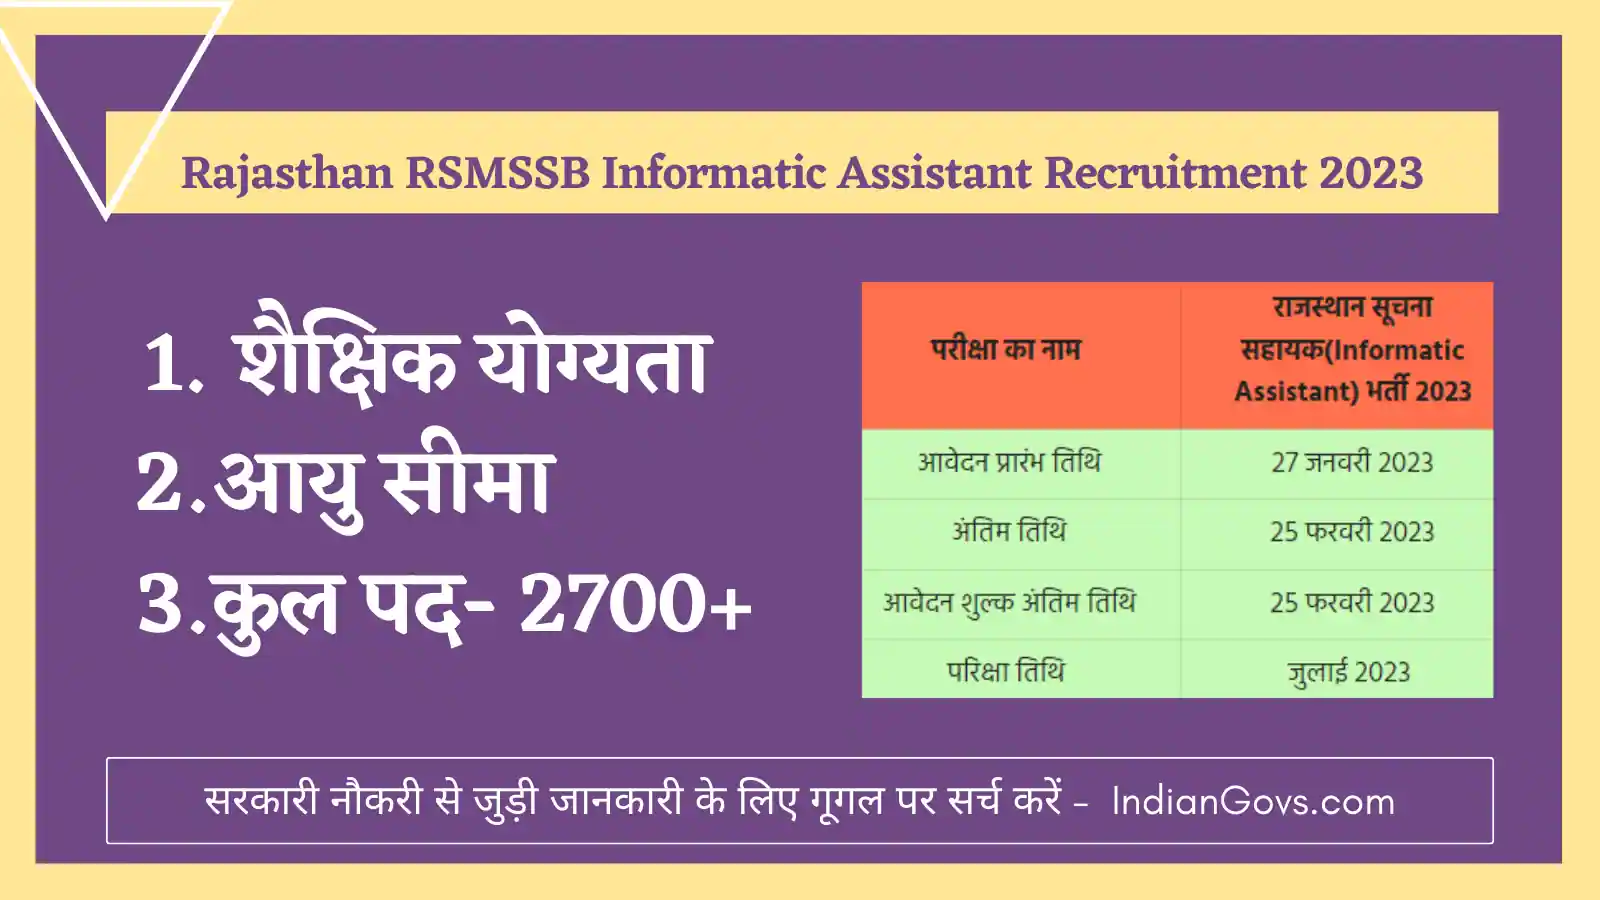 Rajasthan RSMSSB Informatic Assistant Recruitment 2023 in Hindi